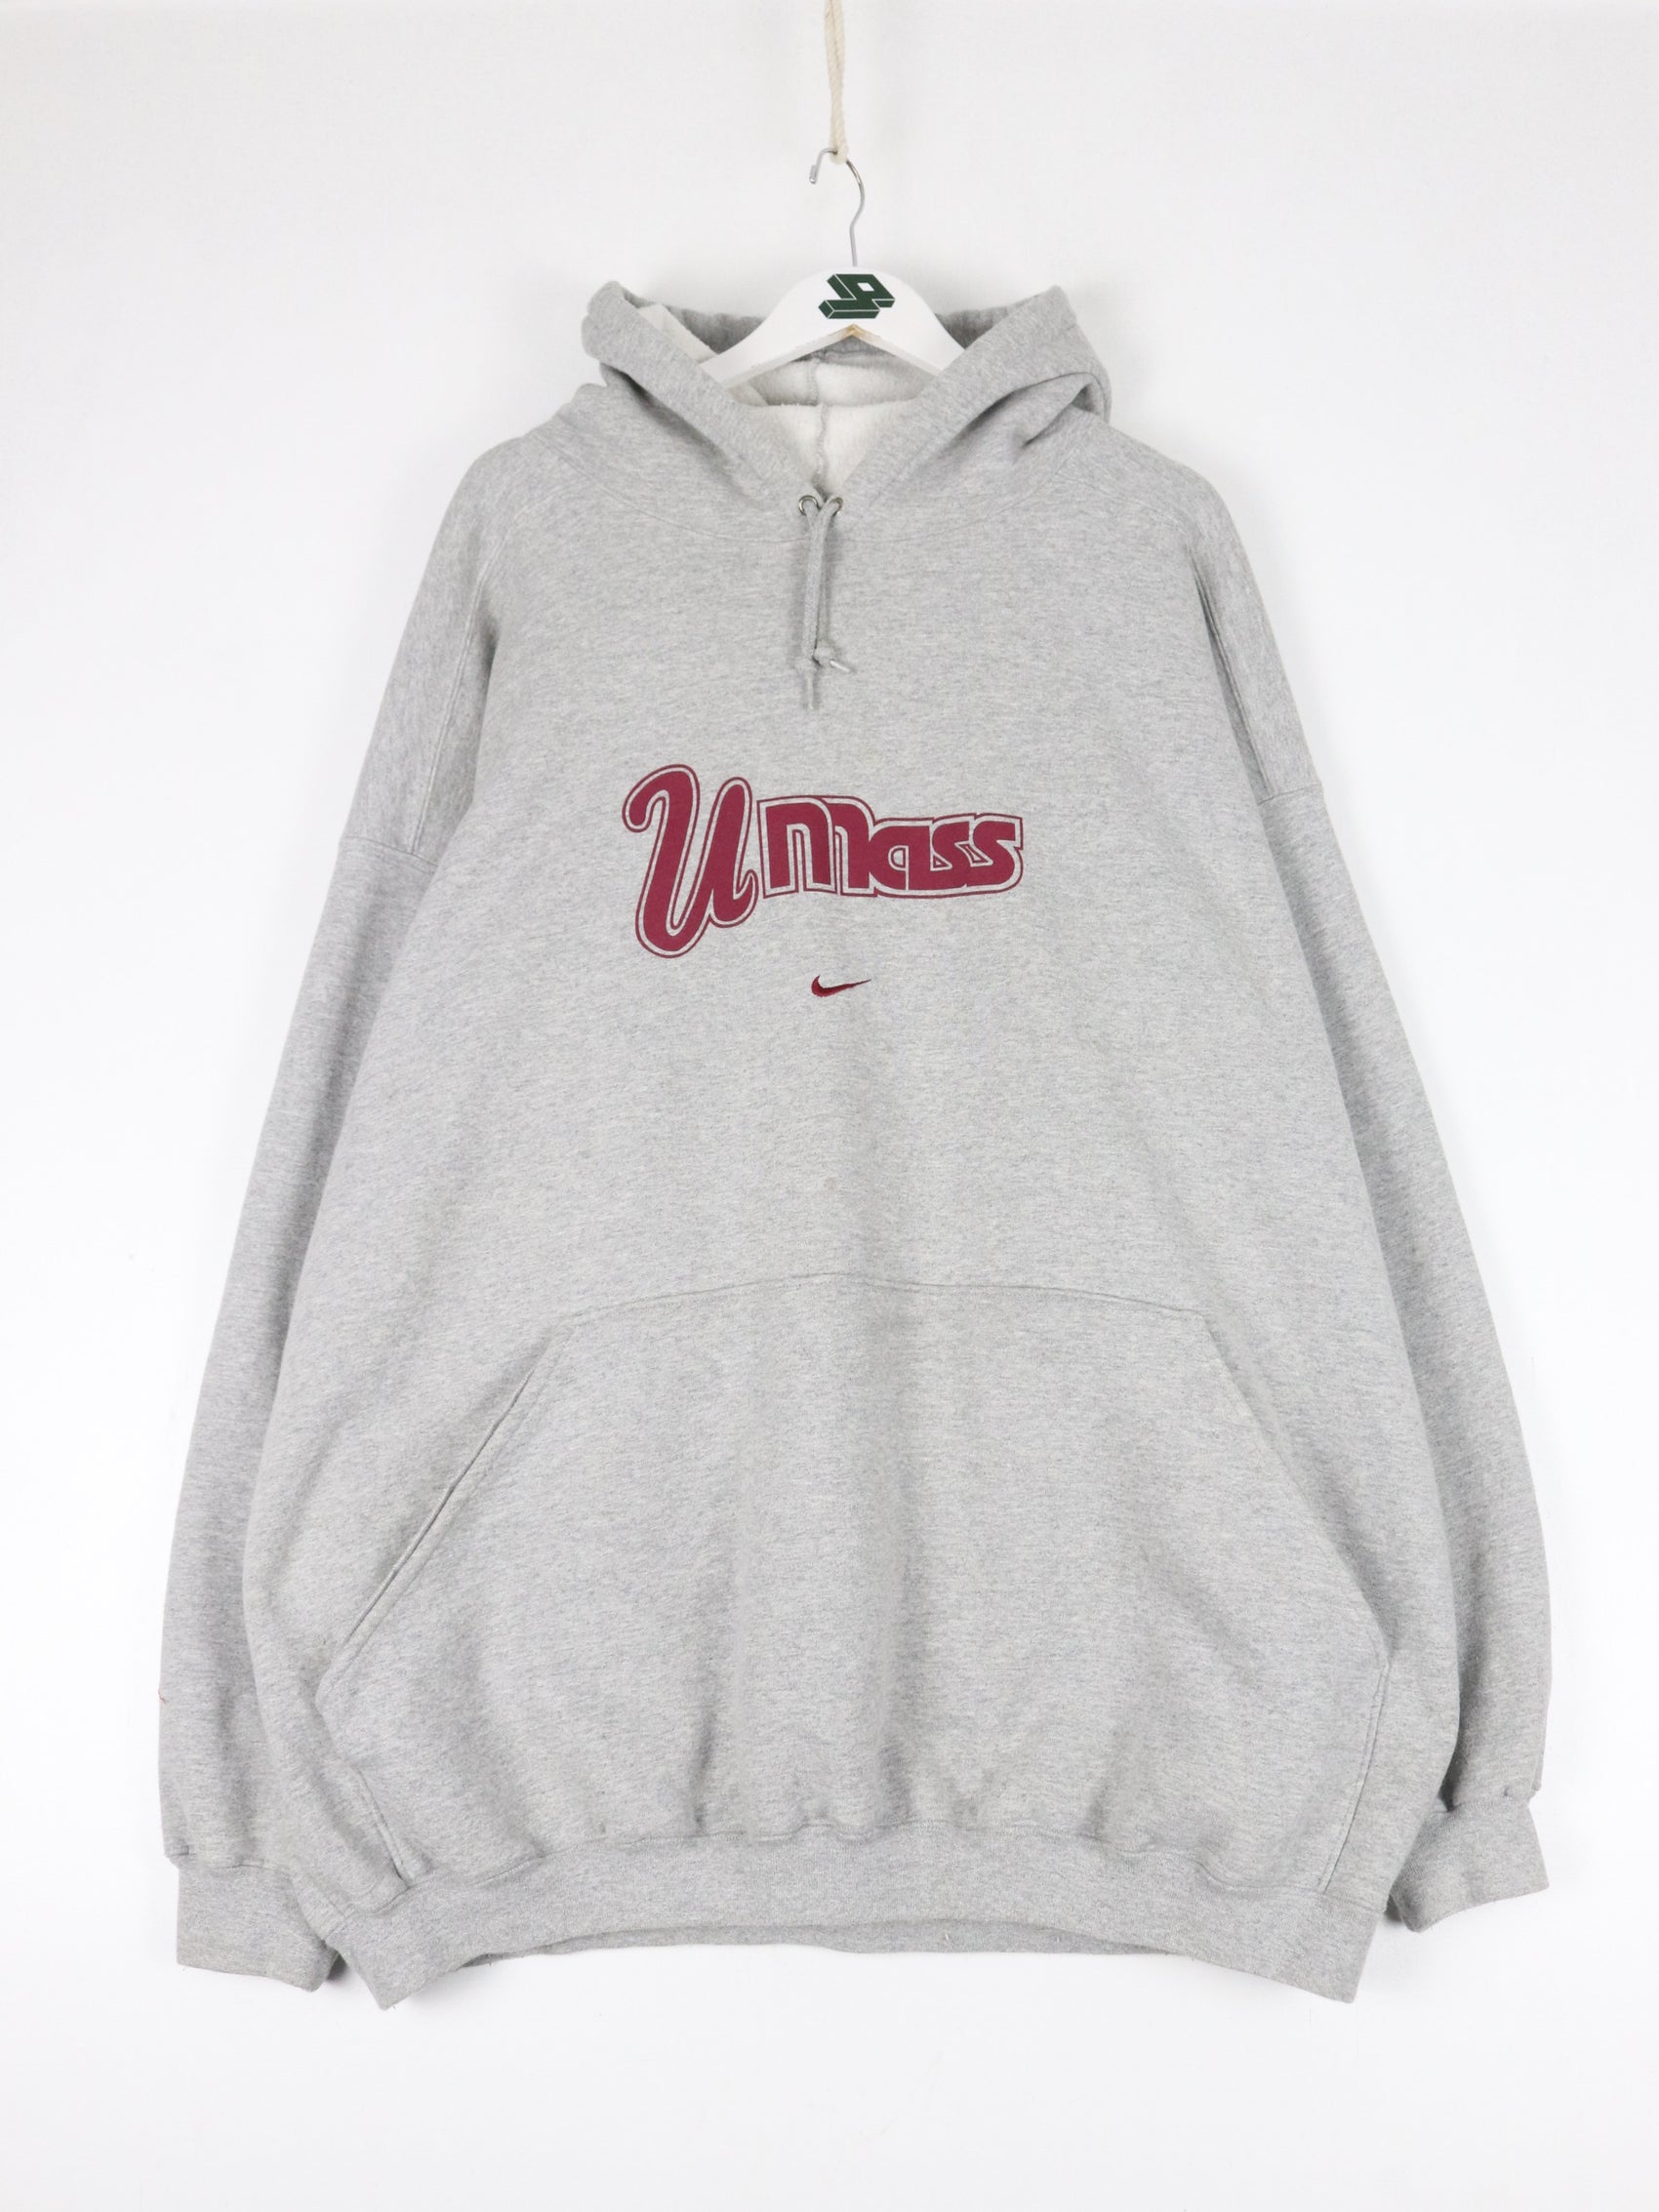 Vintage University of Massachusetts Sweatshirt Mens 3XL Grey Nike Hoodie